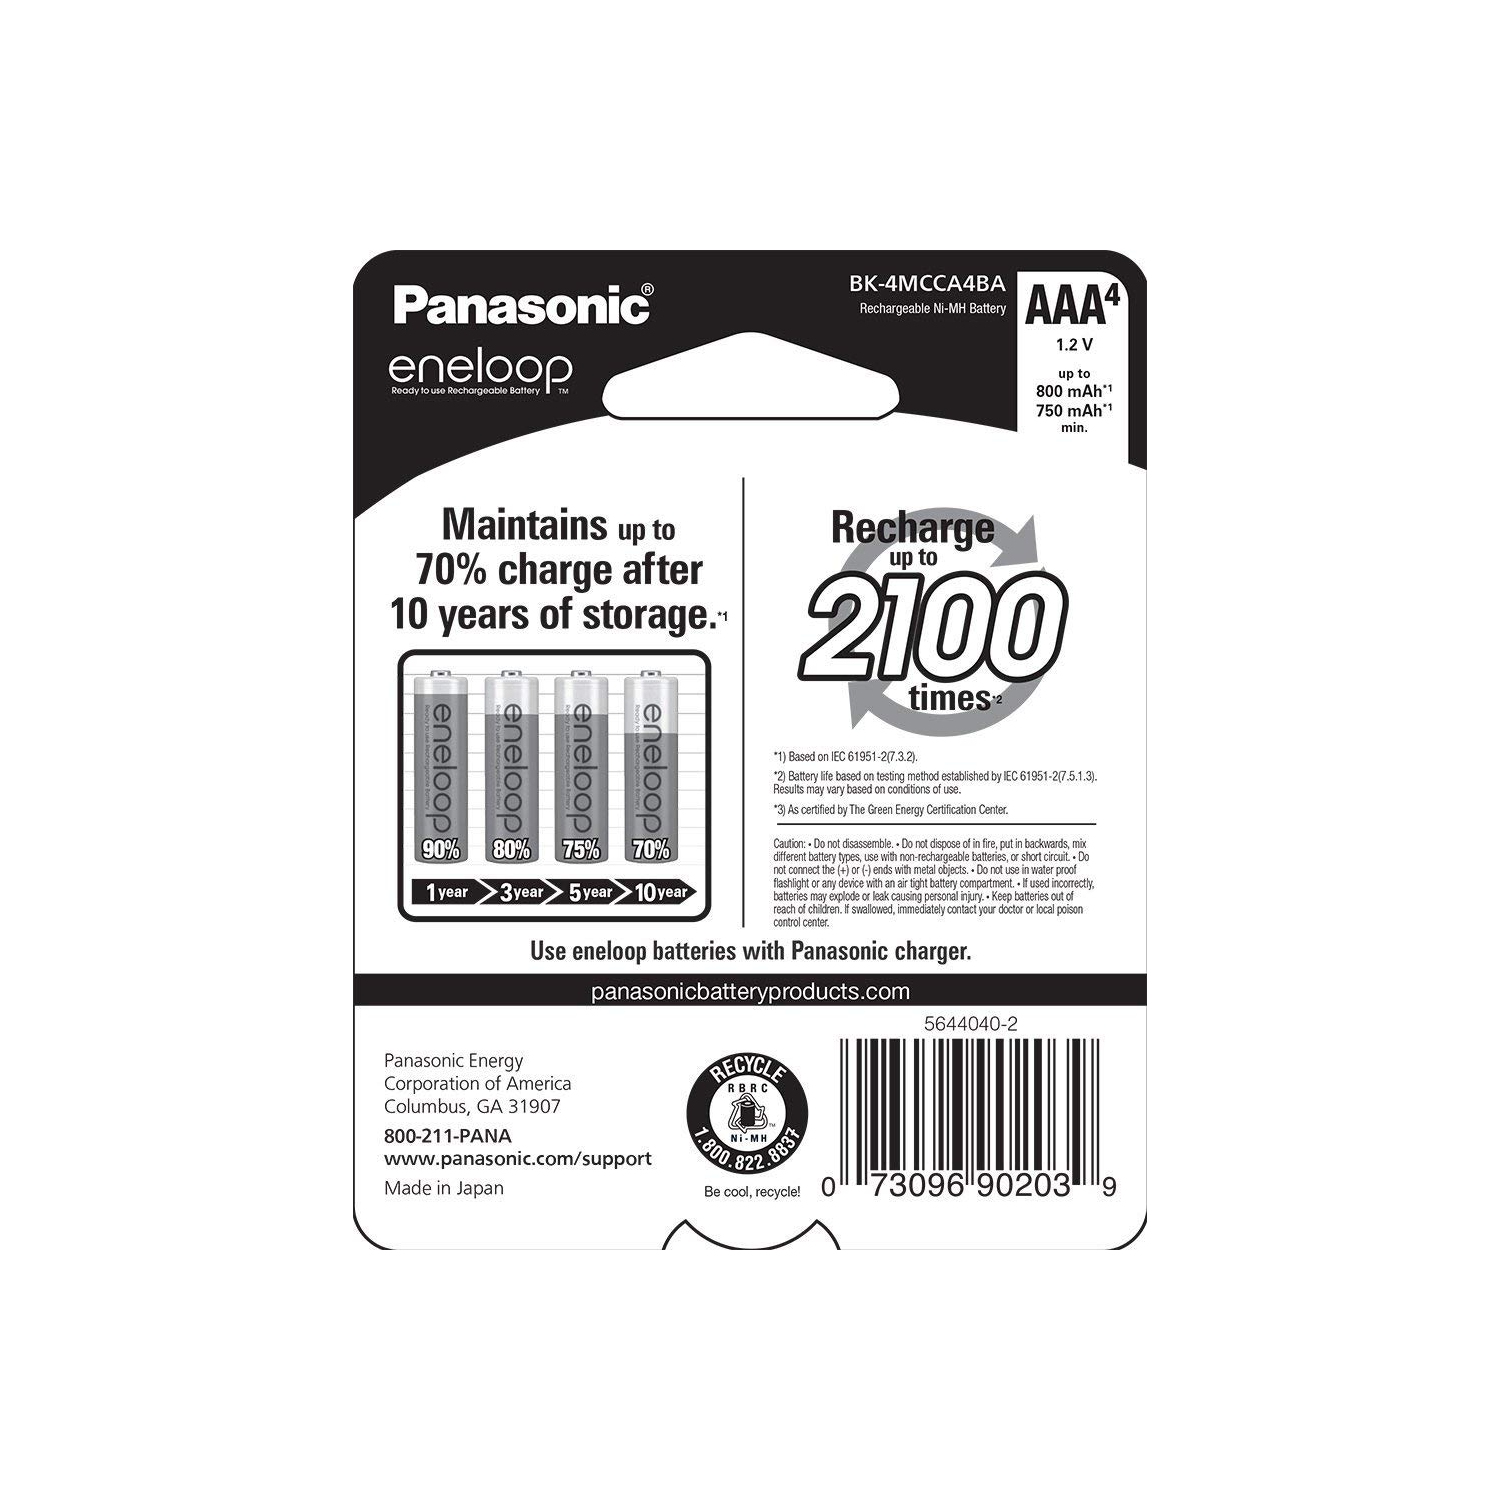 Panasonic BK-4MCCA4BA eneloop AAA 2100 Cycle Ni-MH Pre-Charged Rechargeable  Batteries, 4-Battery Pack : PANASONIC: Health & Household 